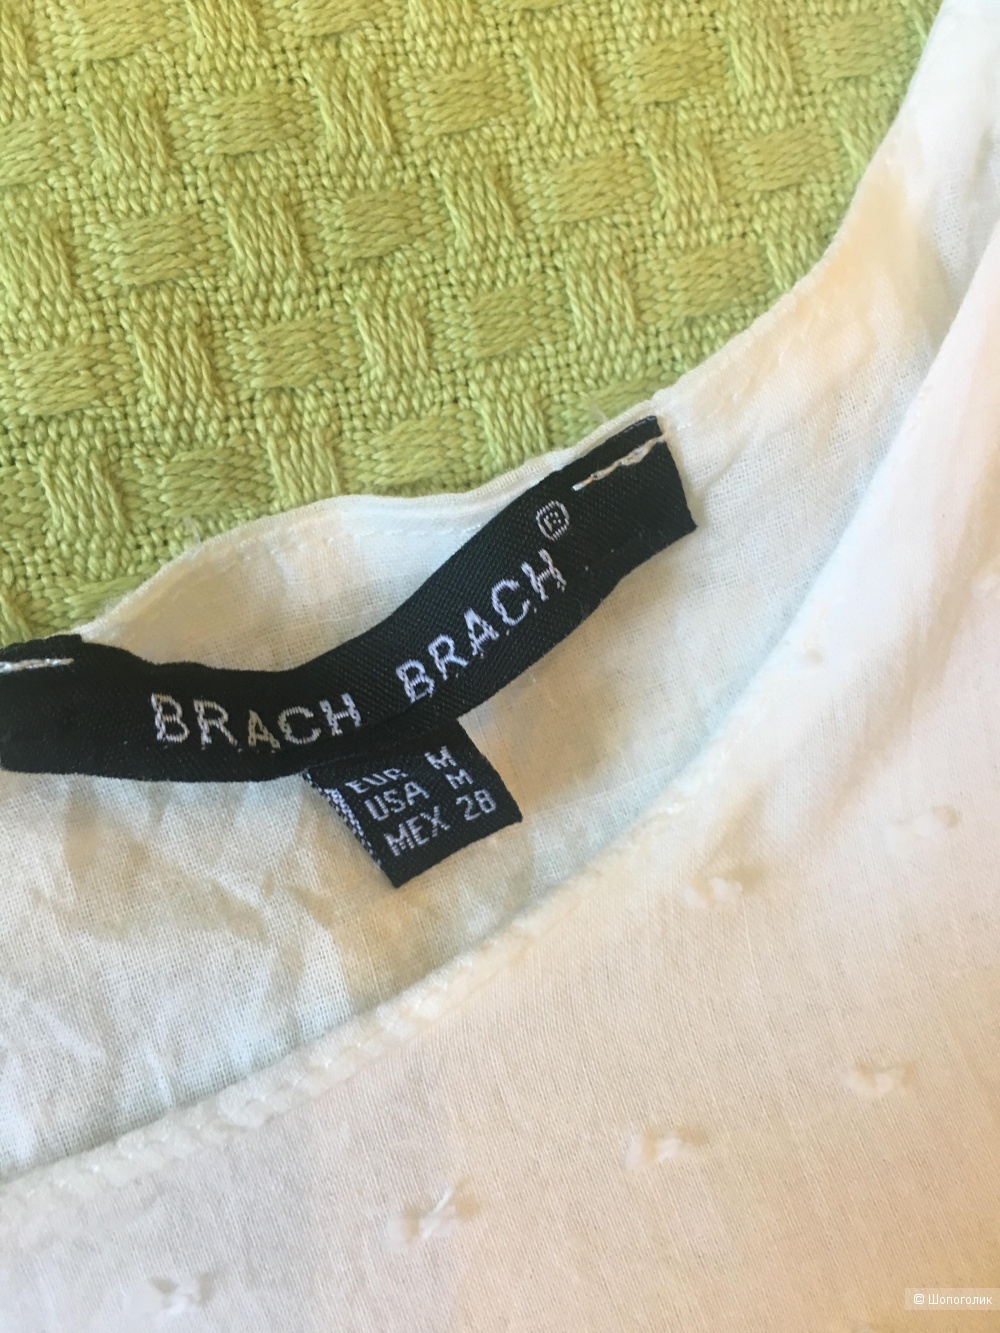 Платье Brach Brach размер S